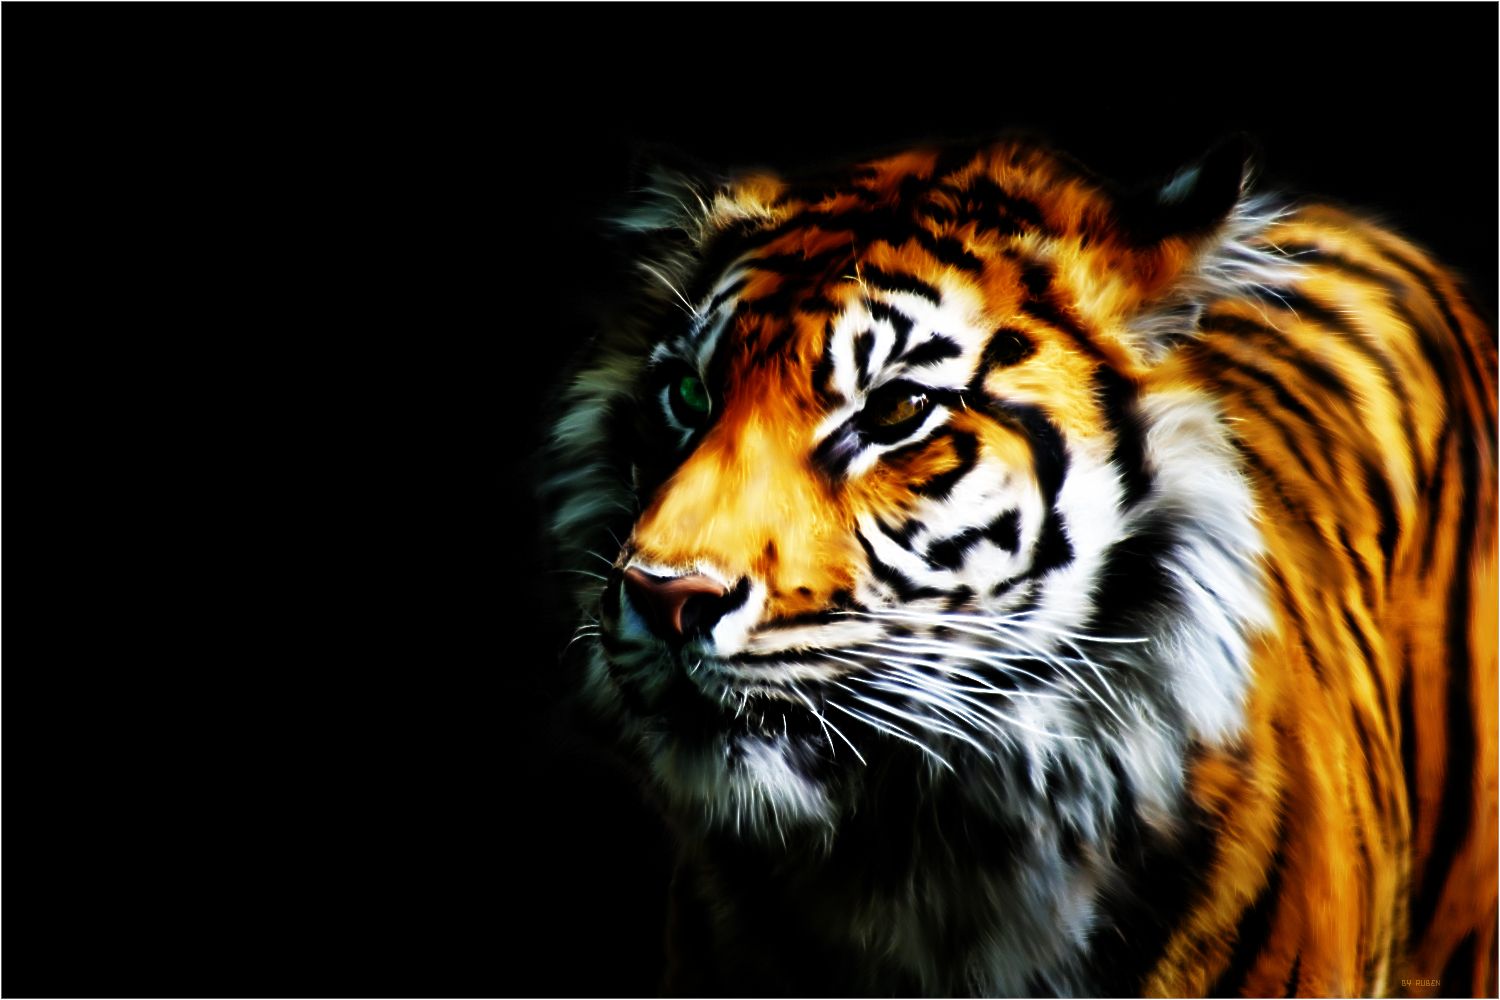 Tiger Wallpaper 9 - Best Wallpaper Collection